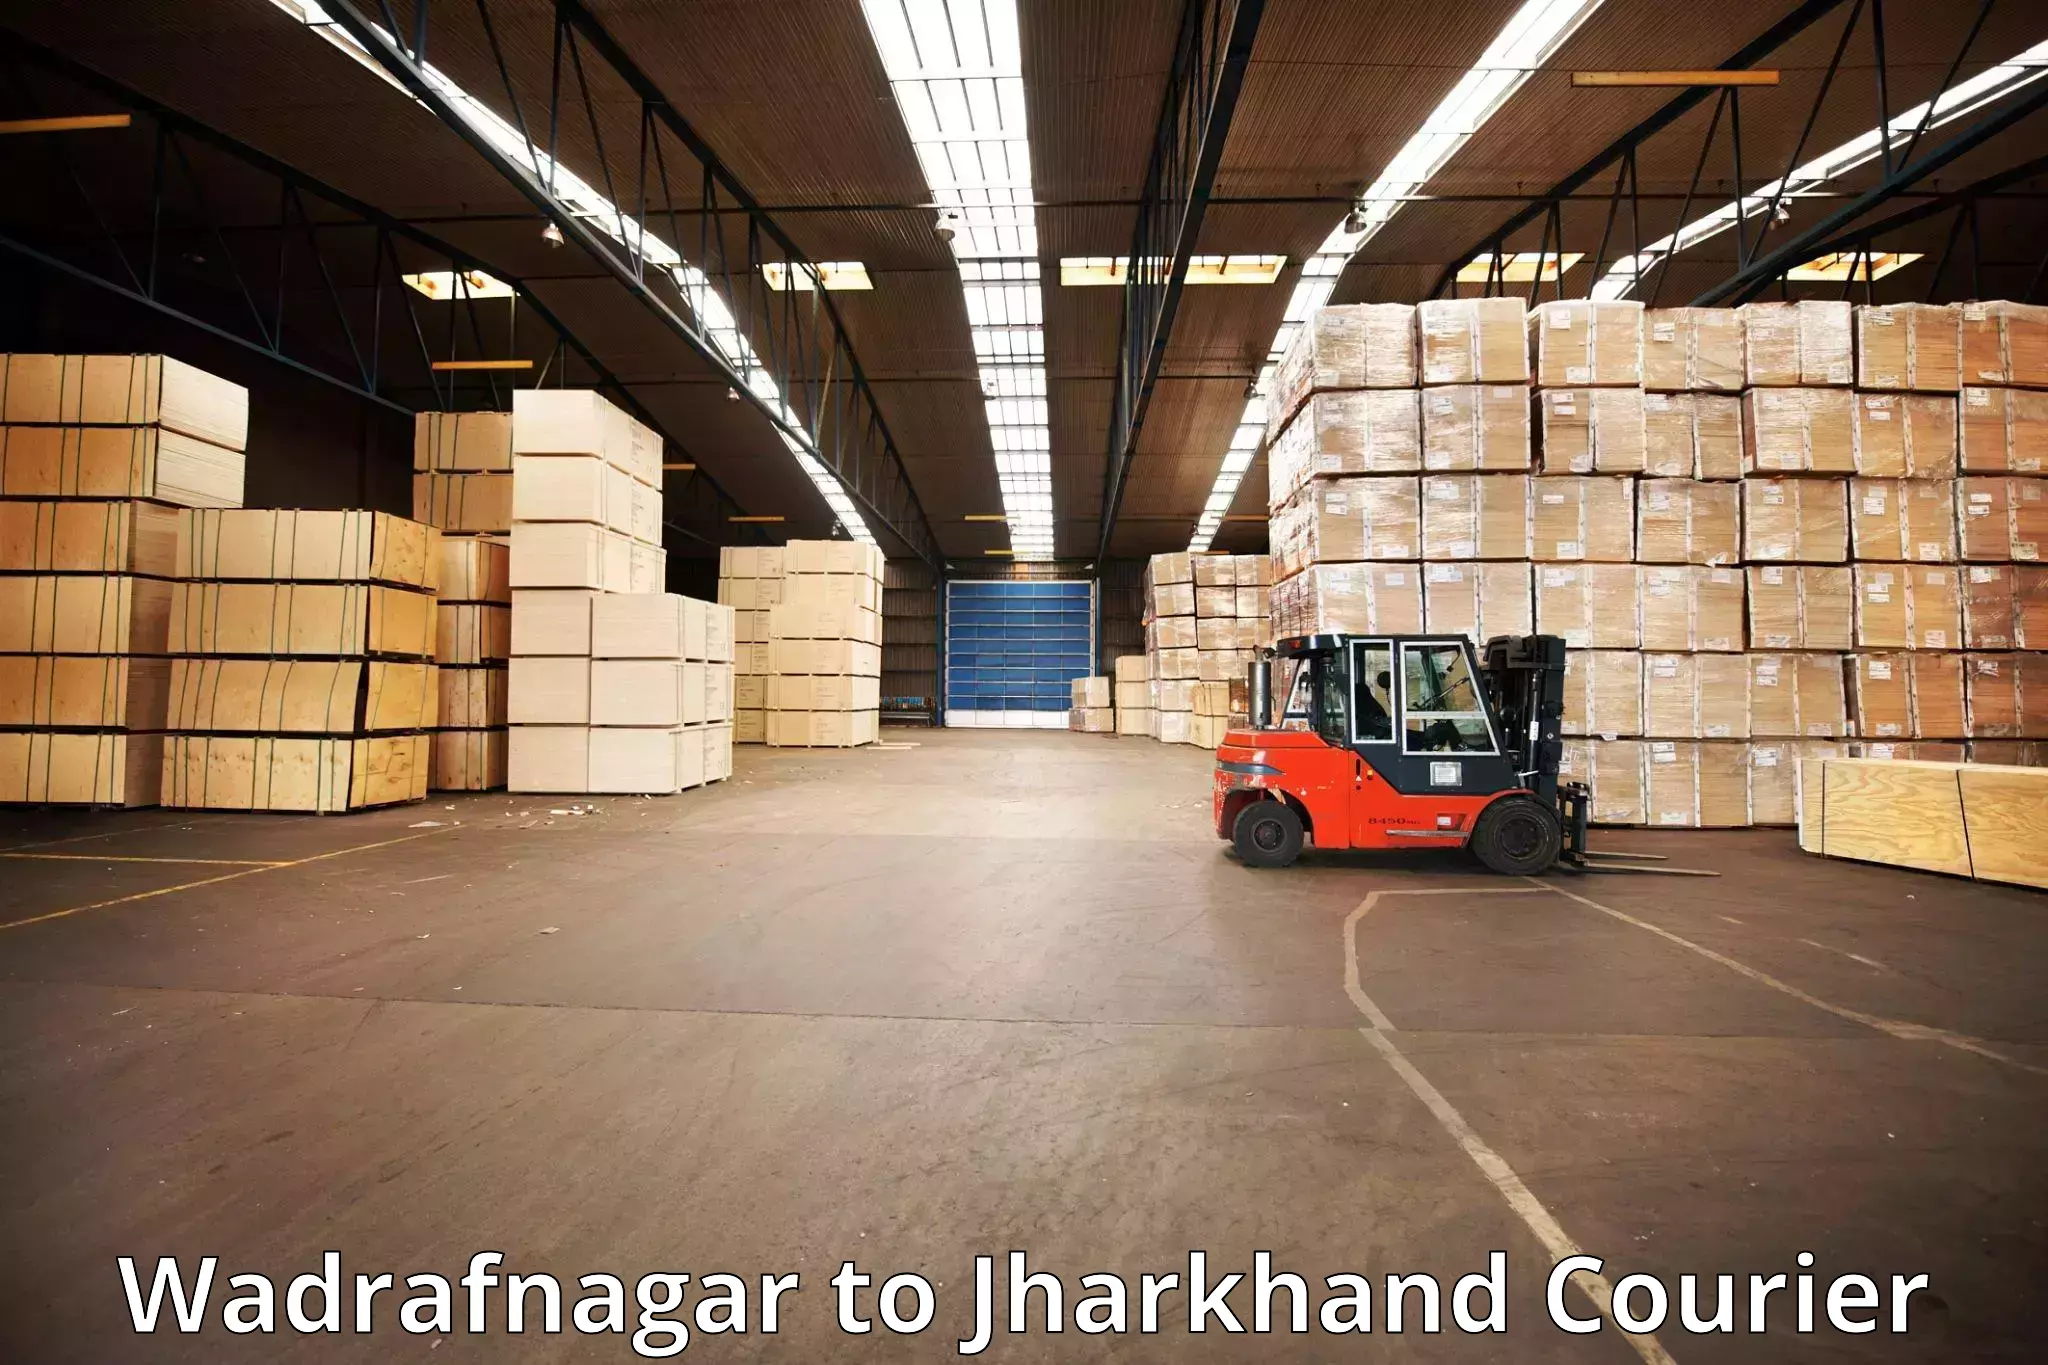 Baggage shipping service Wadrafnagar to Dhalbhumgarh